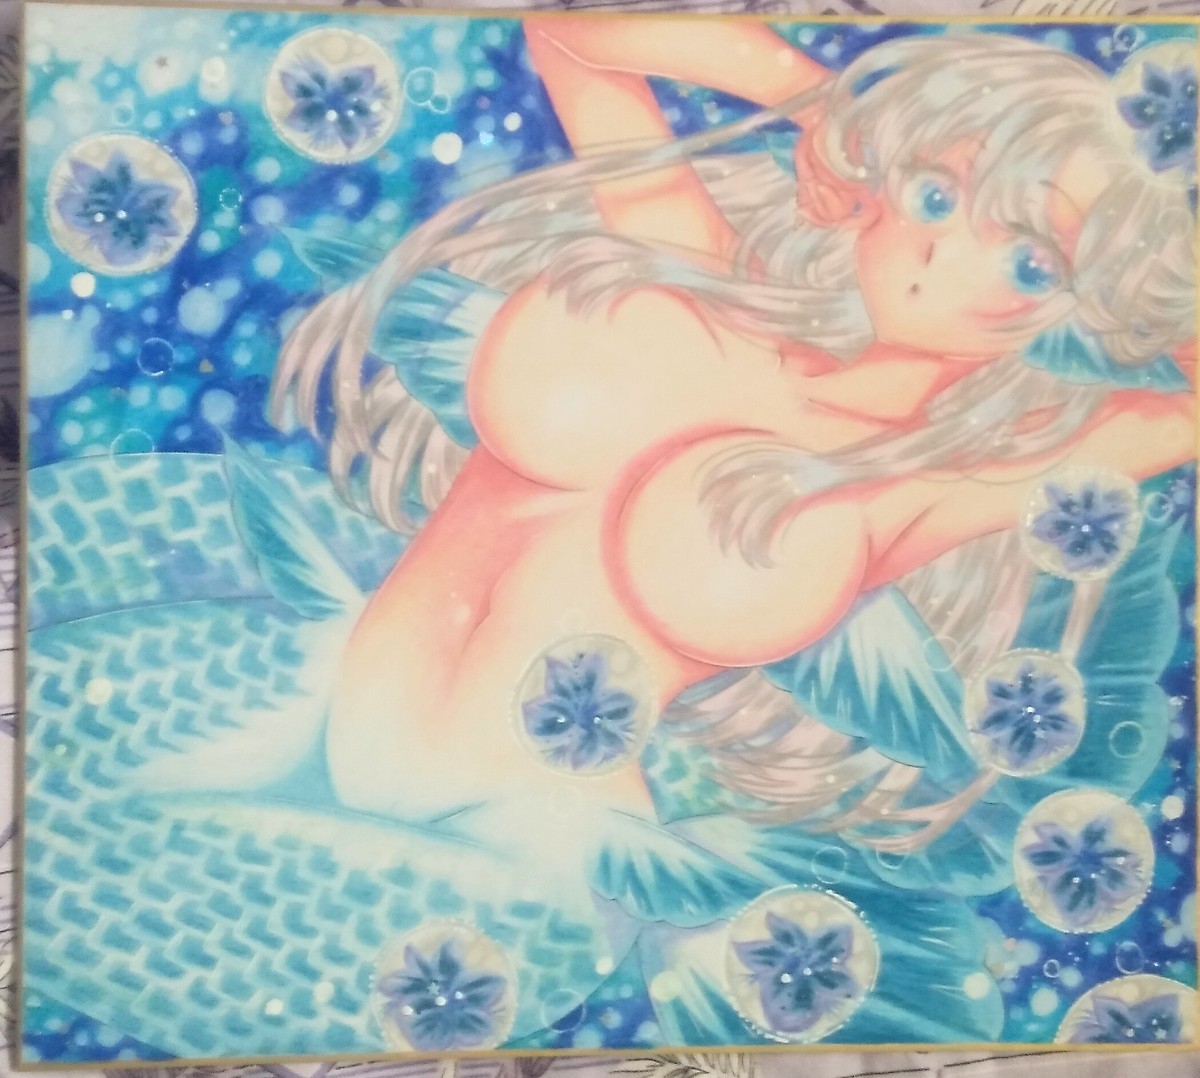  hand-drawn illustrations original * blue flower . person fish san * click post free shipping 